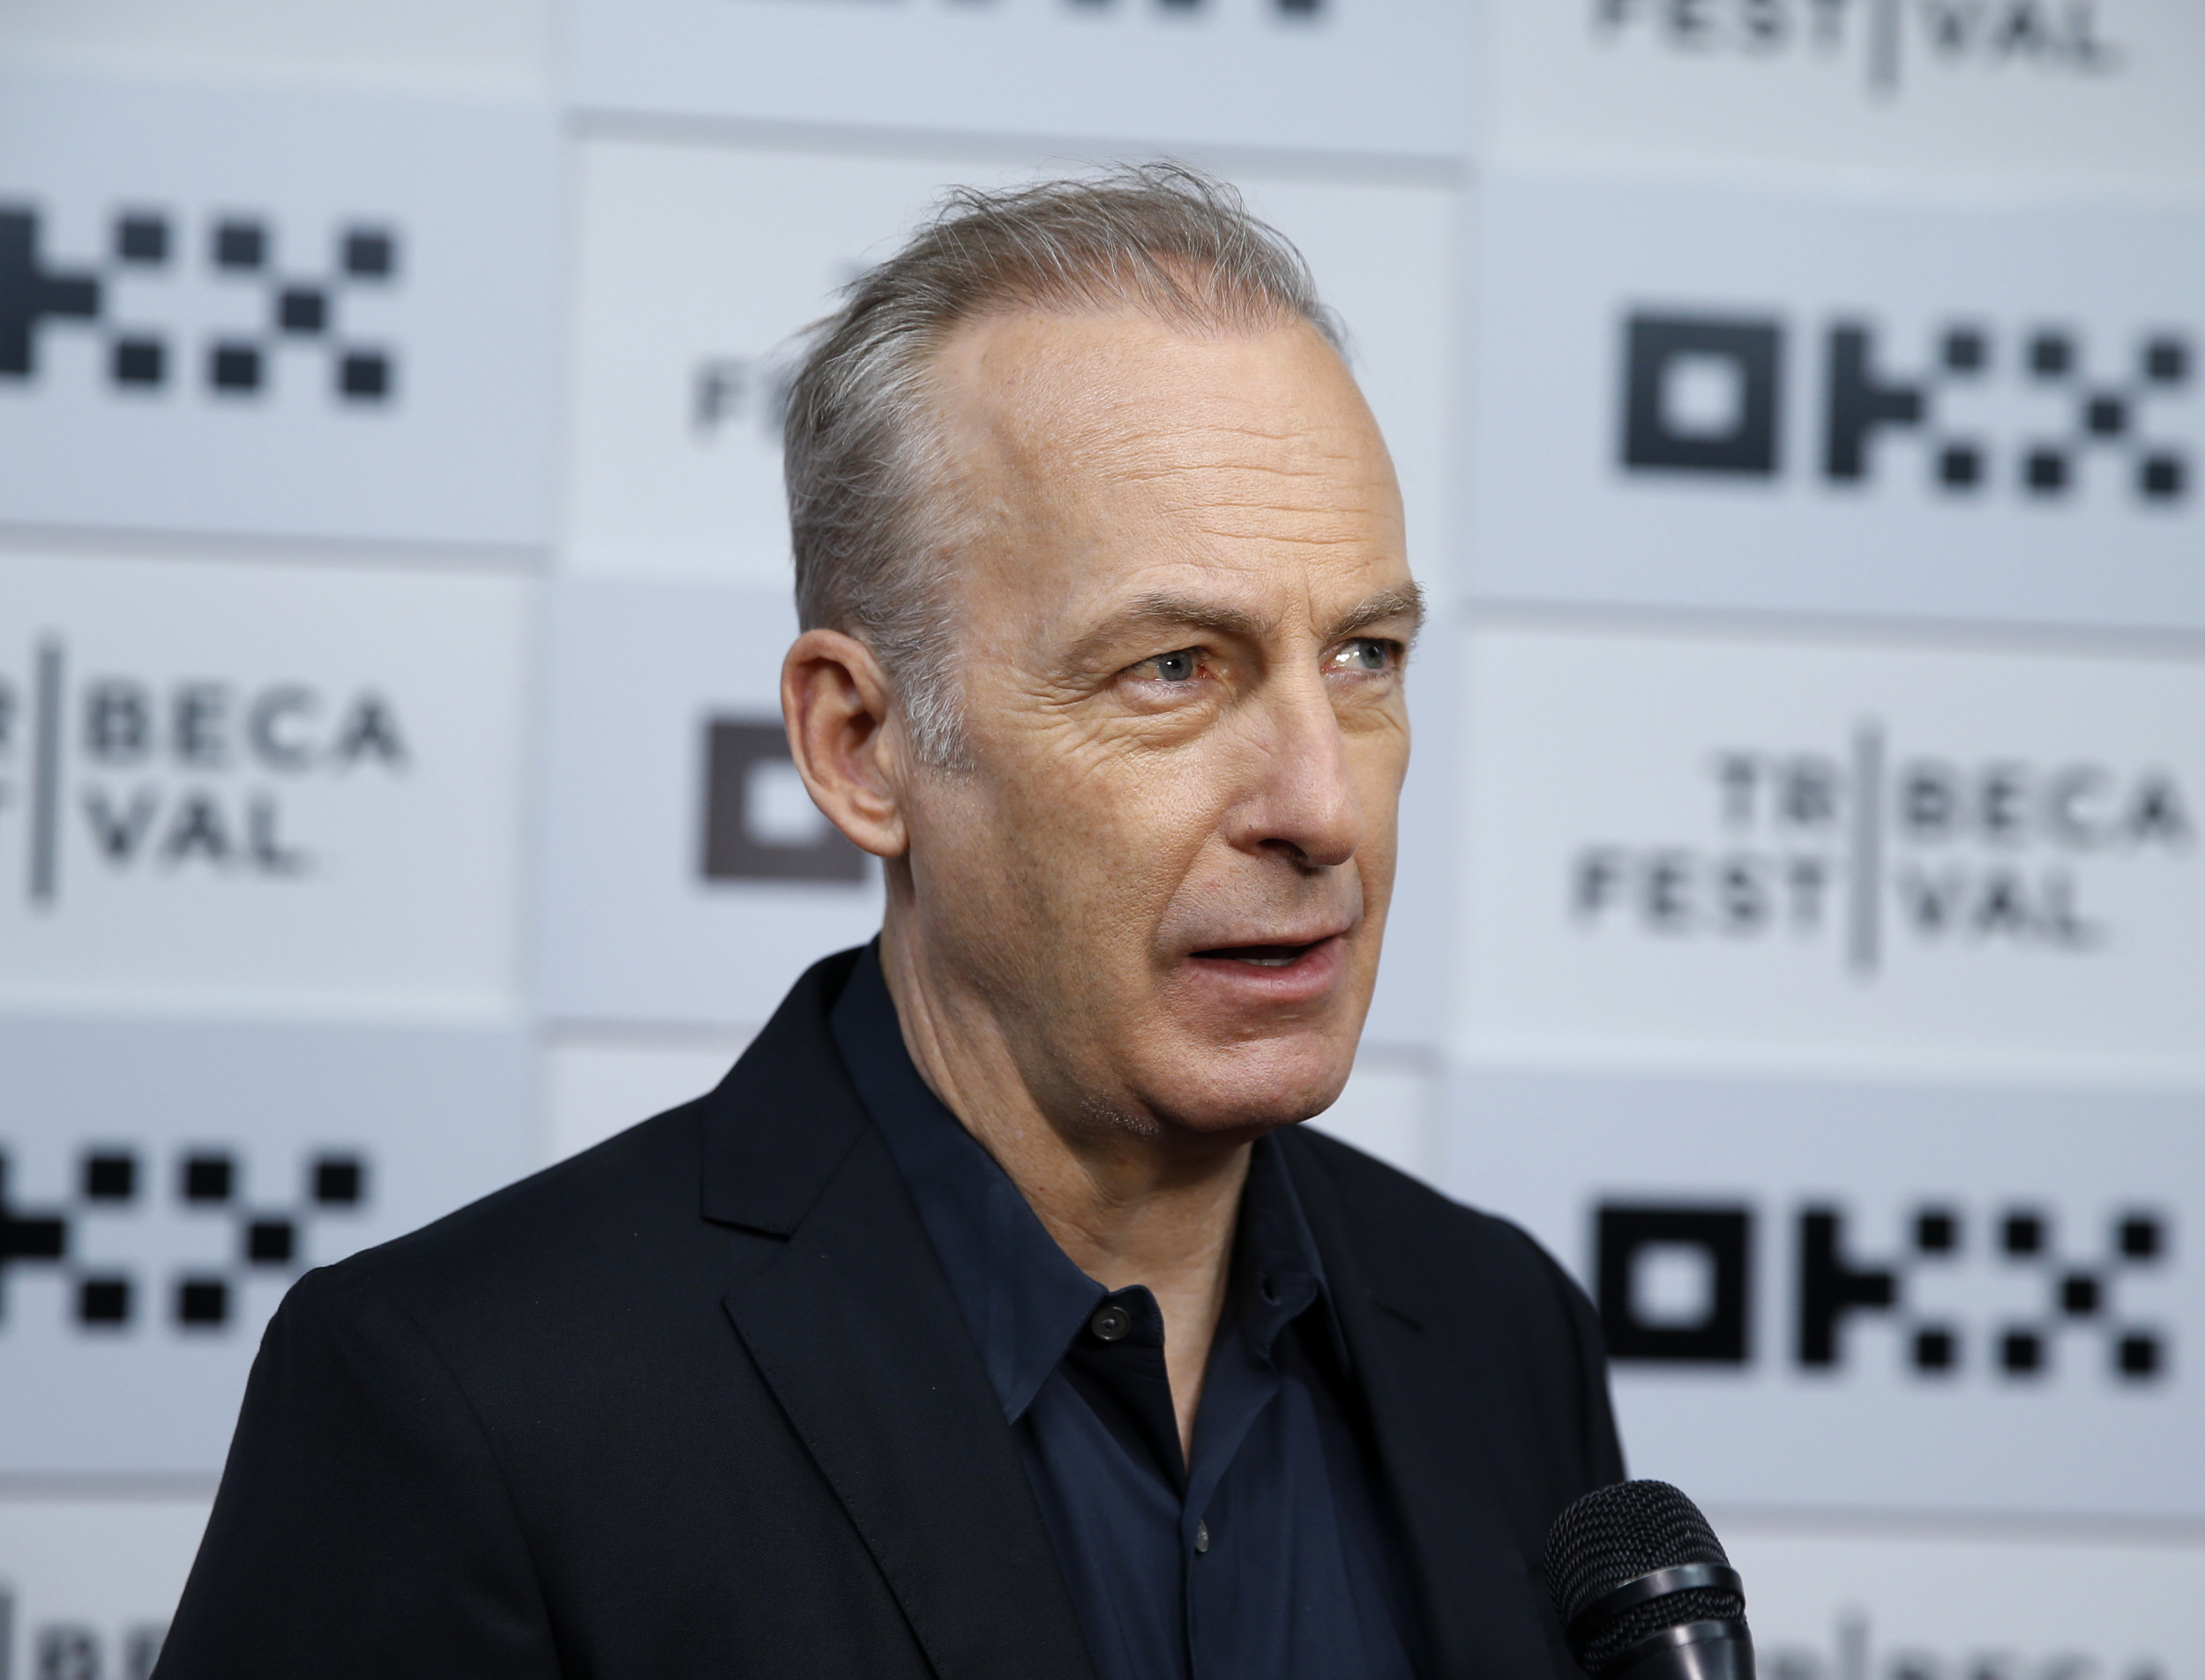 Bob Odenkirk: 'No Memory' Of 'Better Call Saul' Scene Before Heart Attack